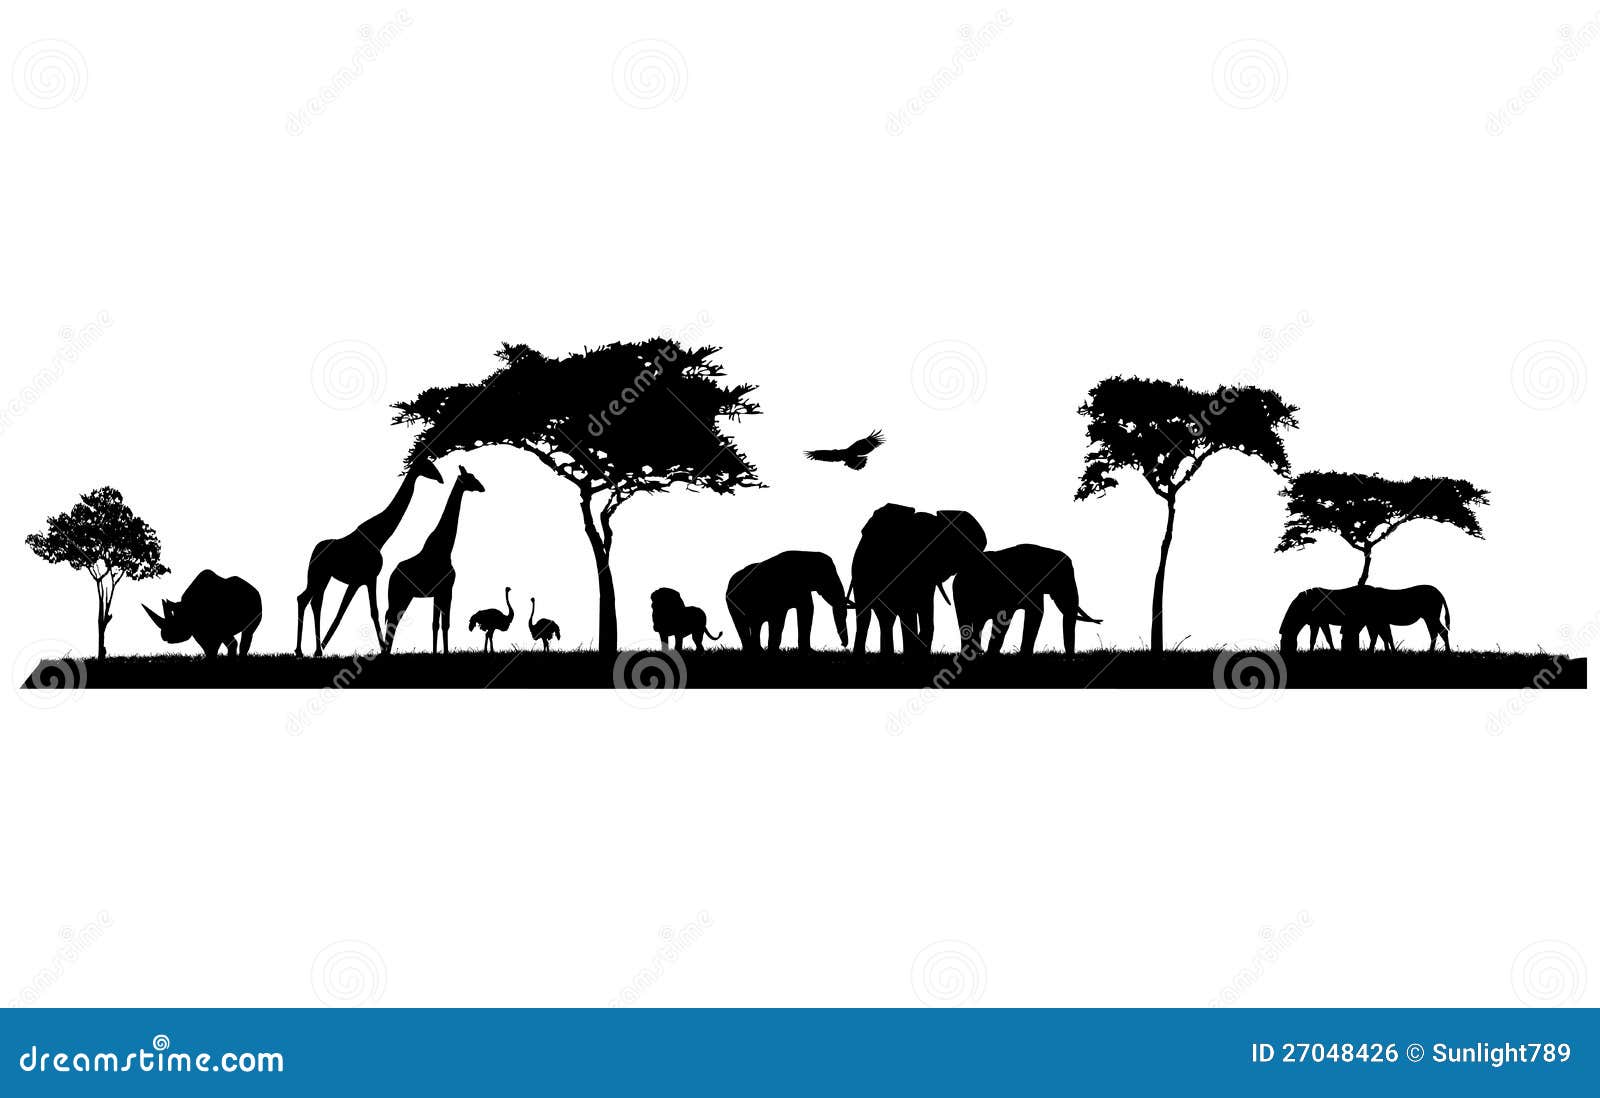 silhouette of wildlife safari